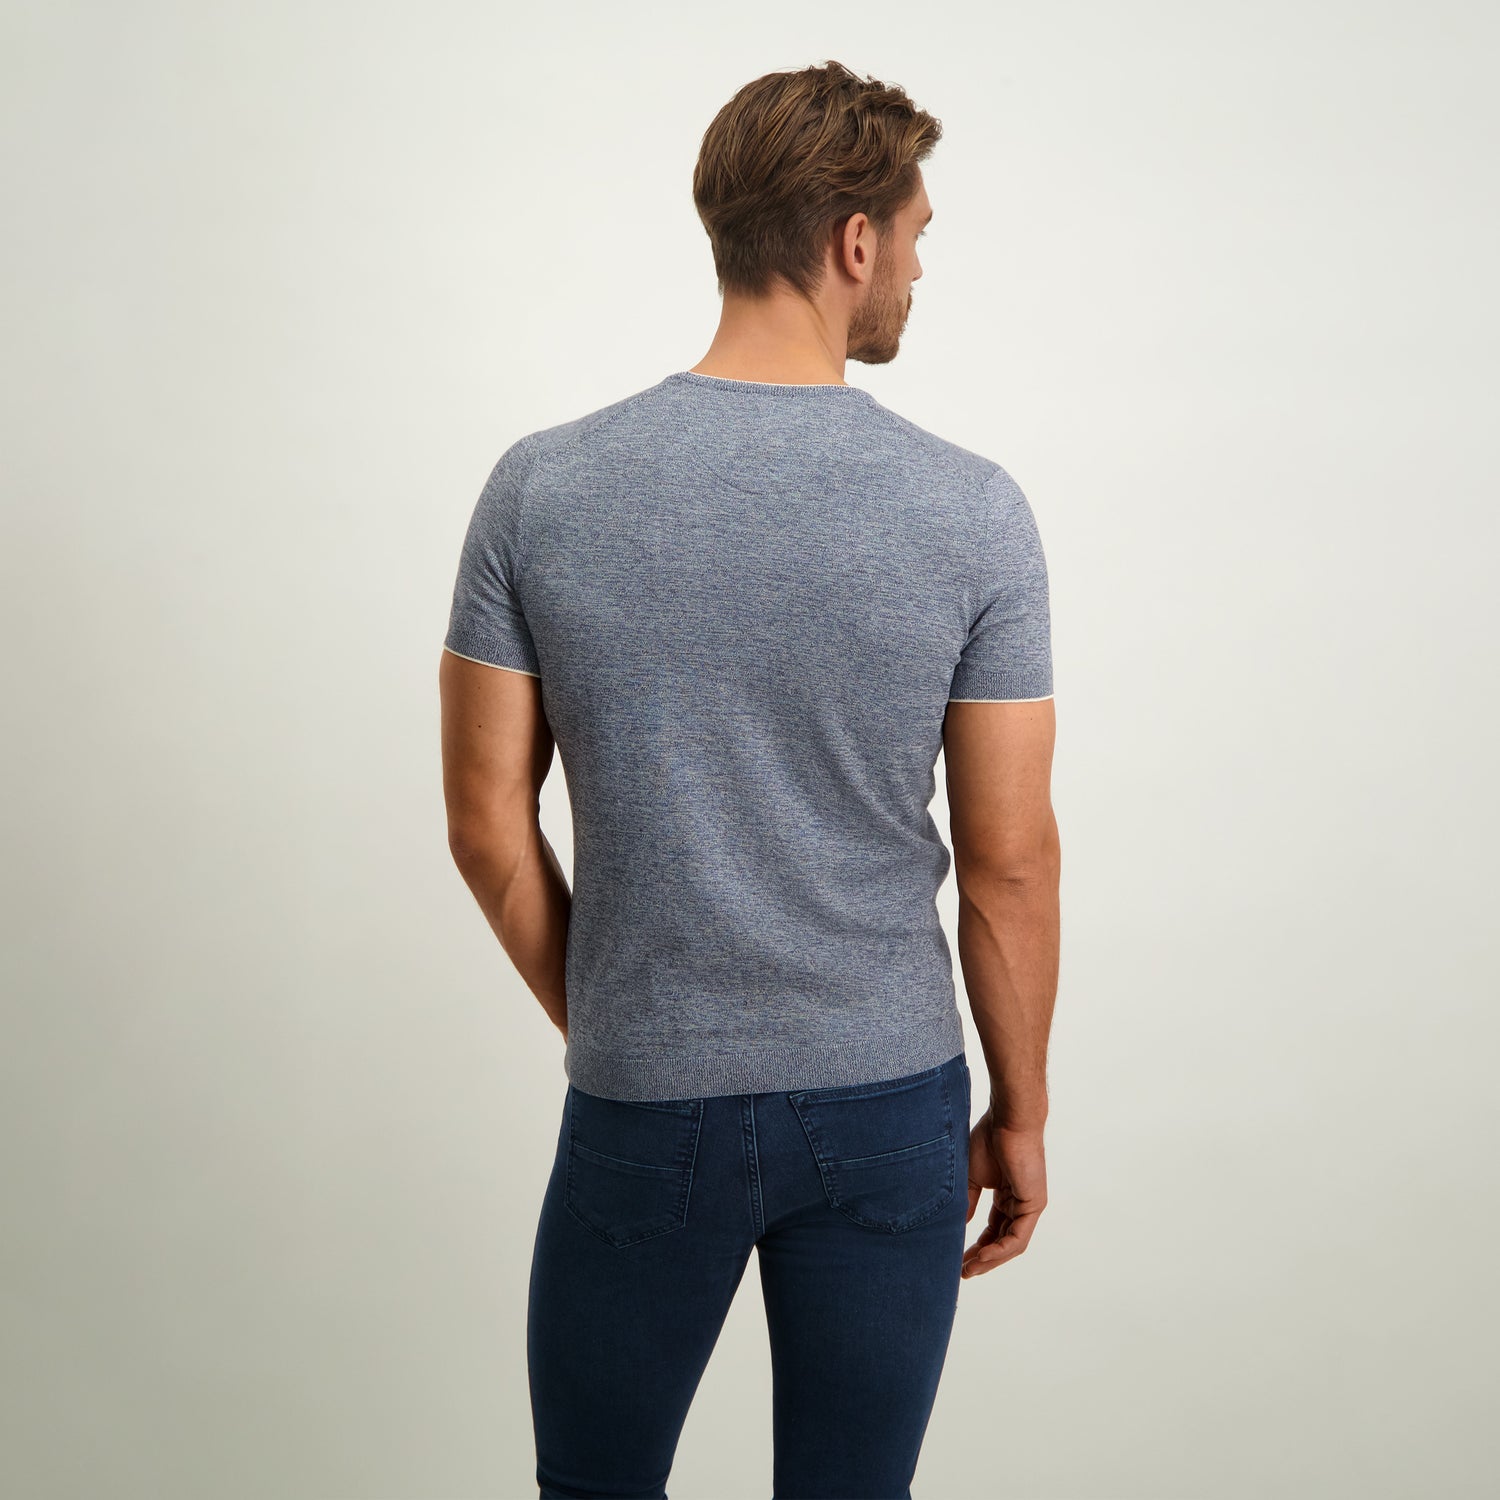 T-shirt structuurgebreid - donkerblauw/middenblauw